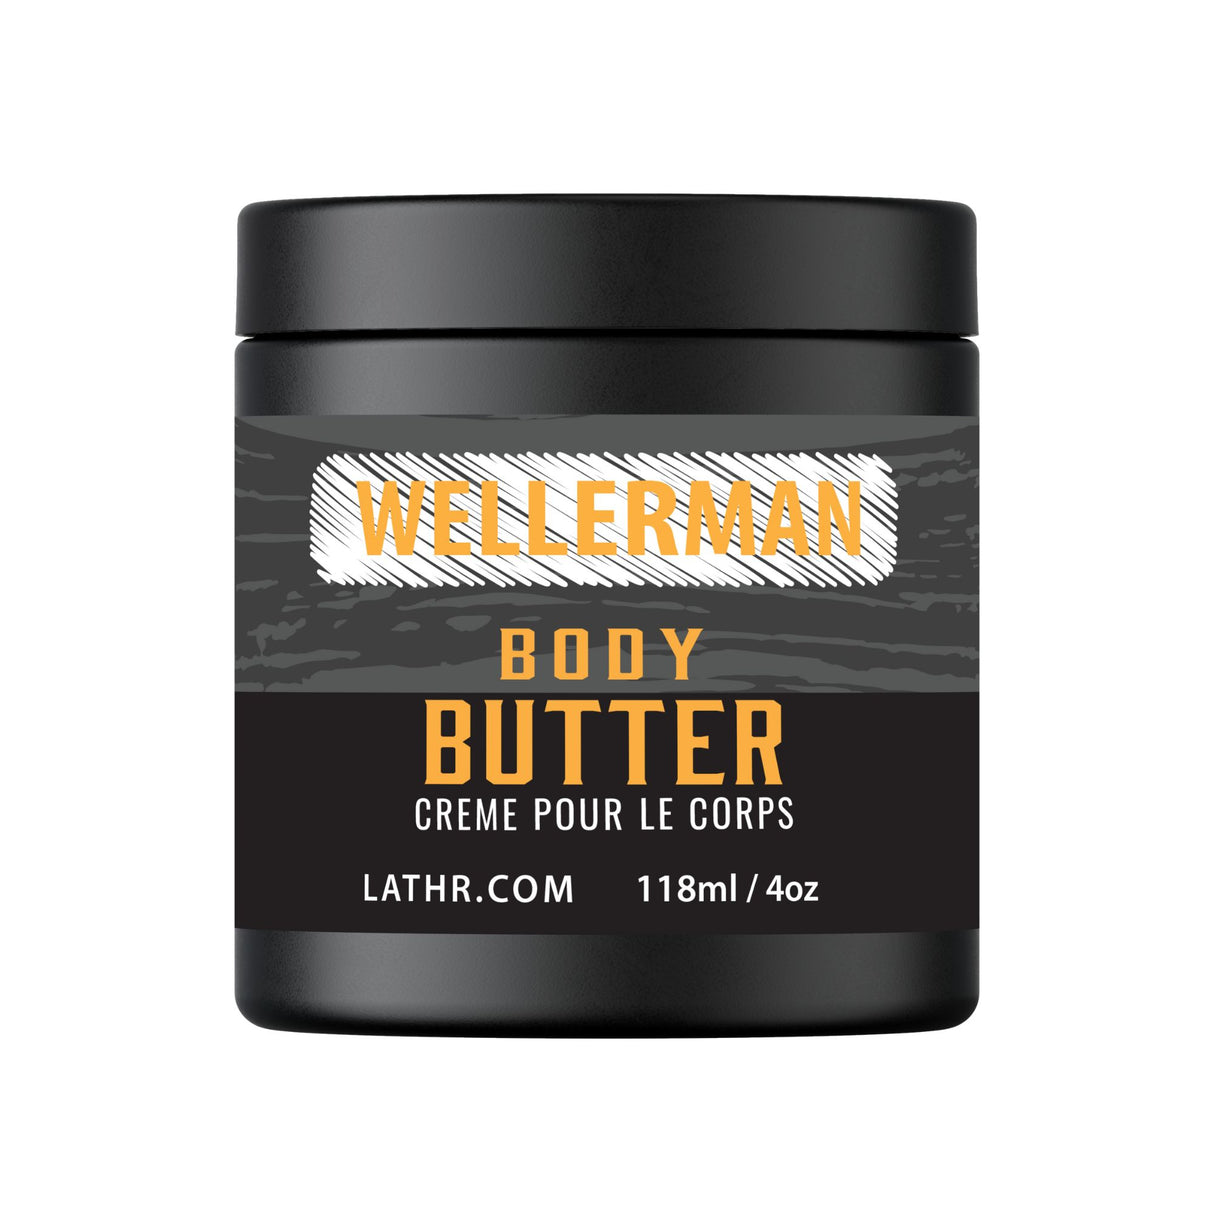 Body Butter - Wellerman